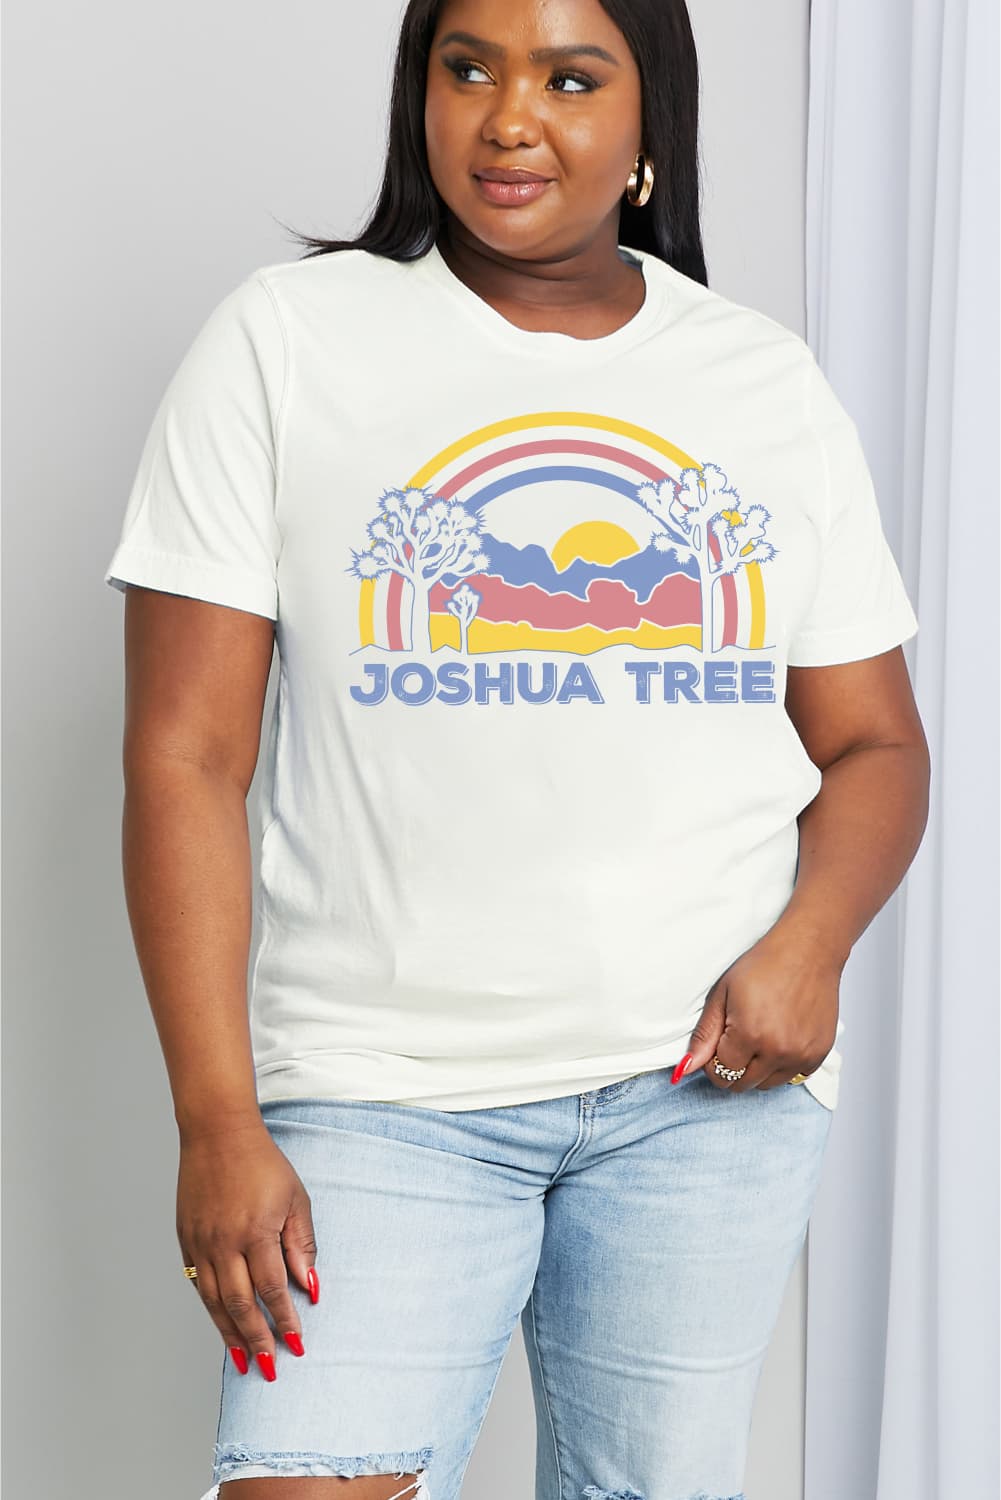 Simply Love JOSHUA TREE Graphic Cotton Tee